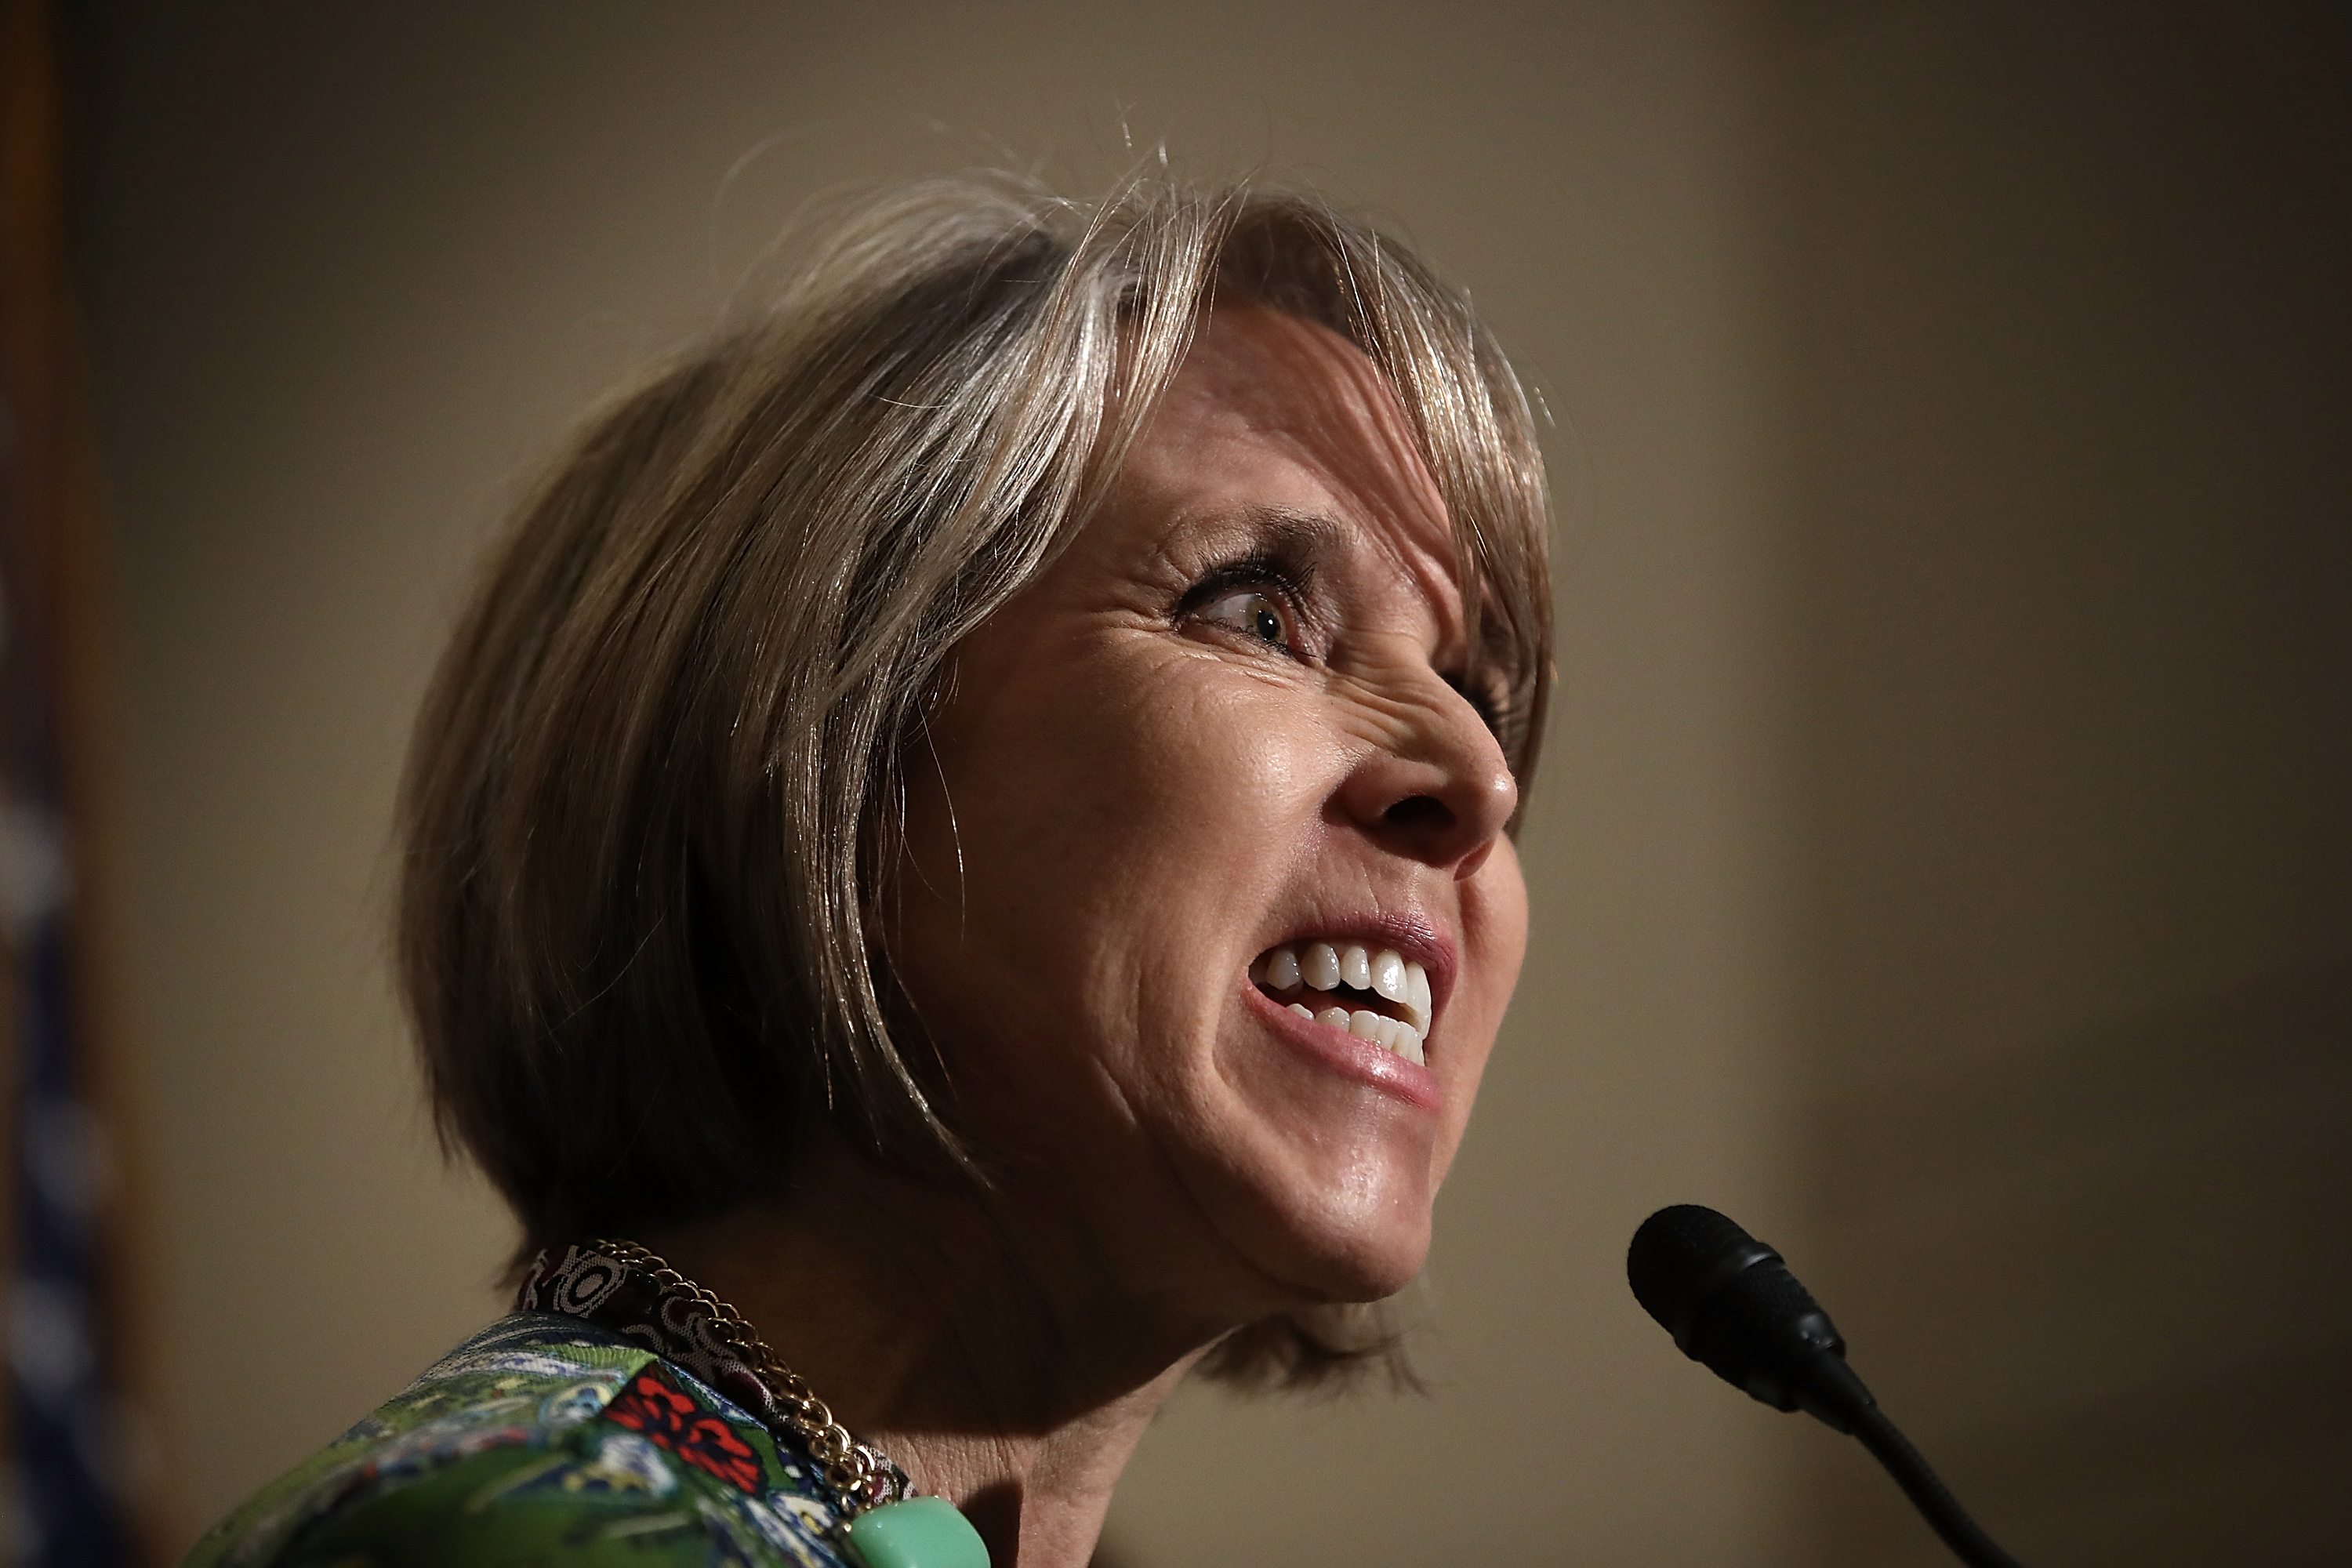 Michelle Lujan Grisham aclaró que quiere continuar en la política estatal. Foto: Win McNamee / Getty Images